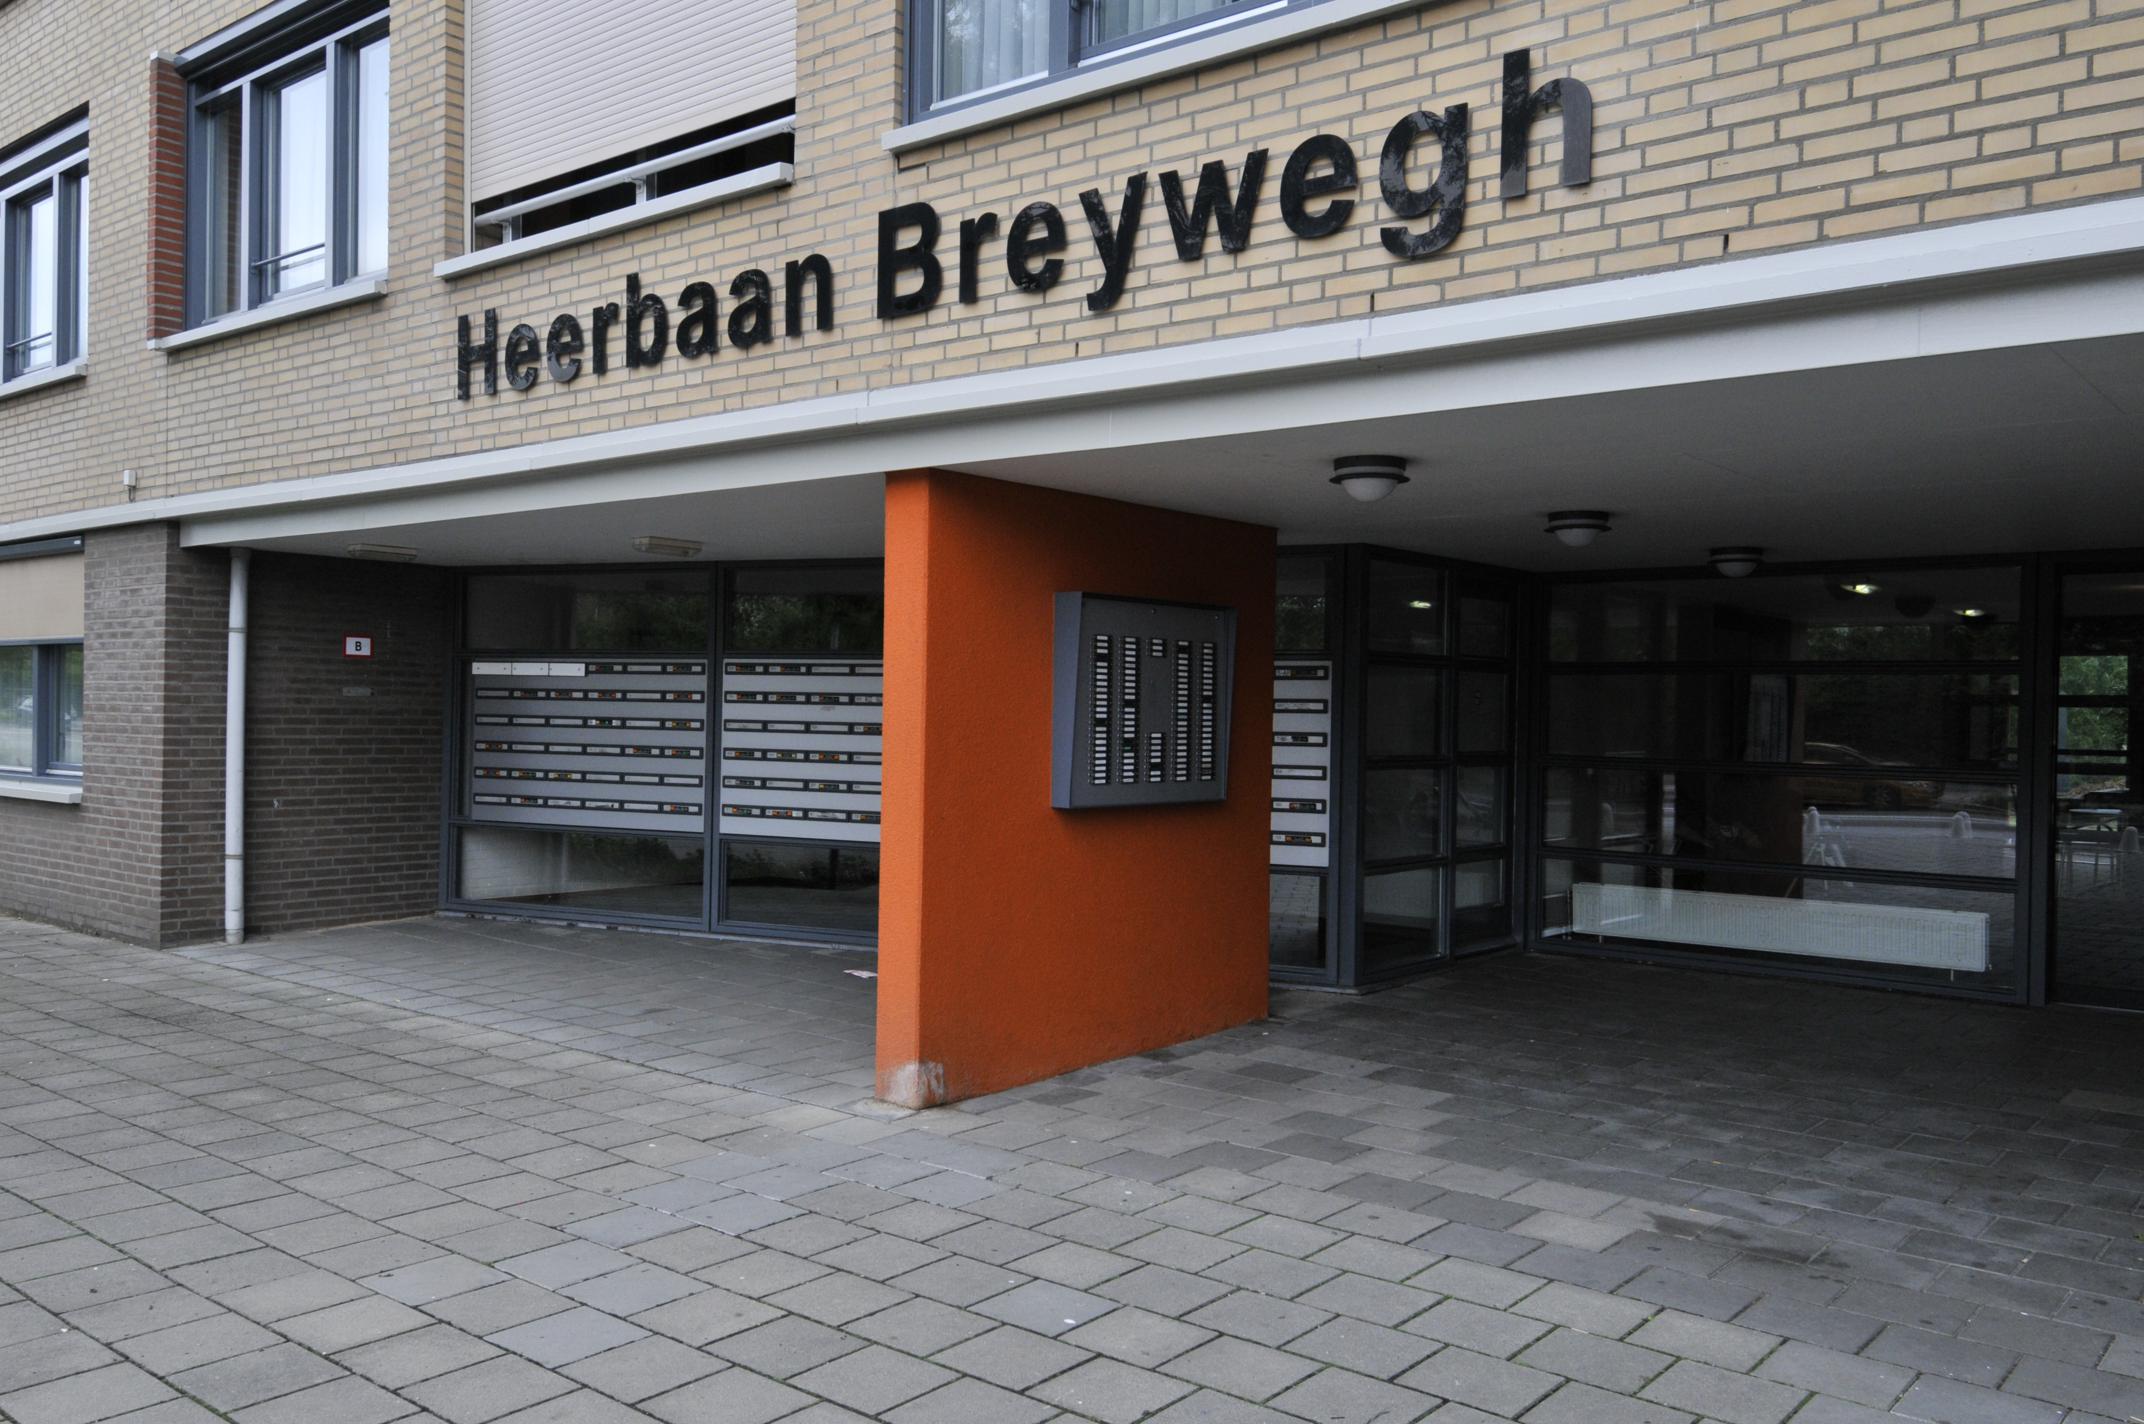 Heerbaan Breywegh 98